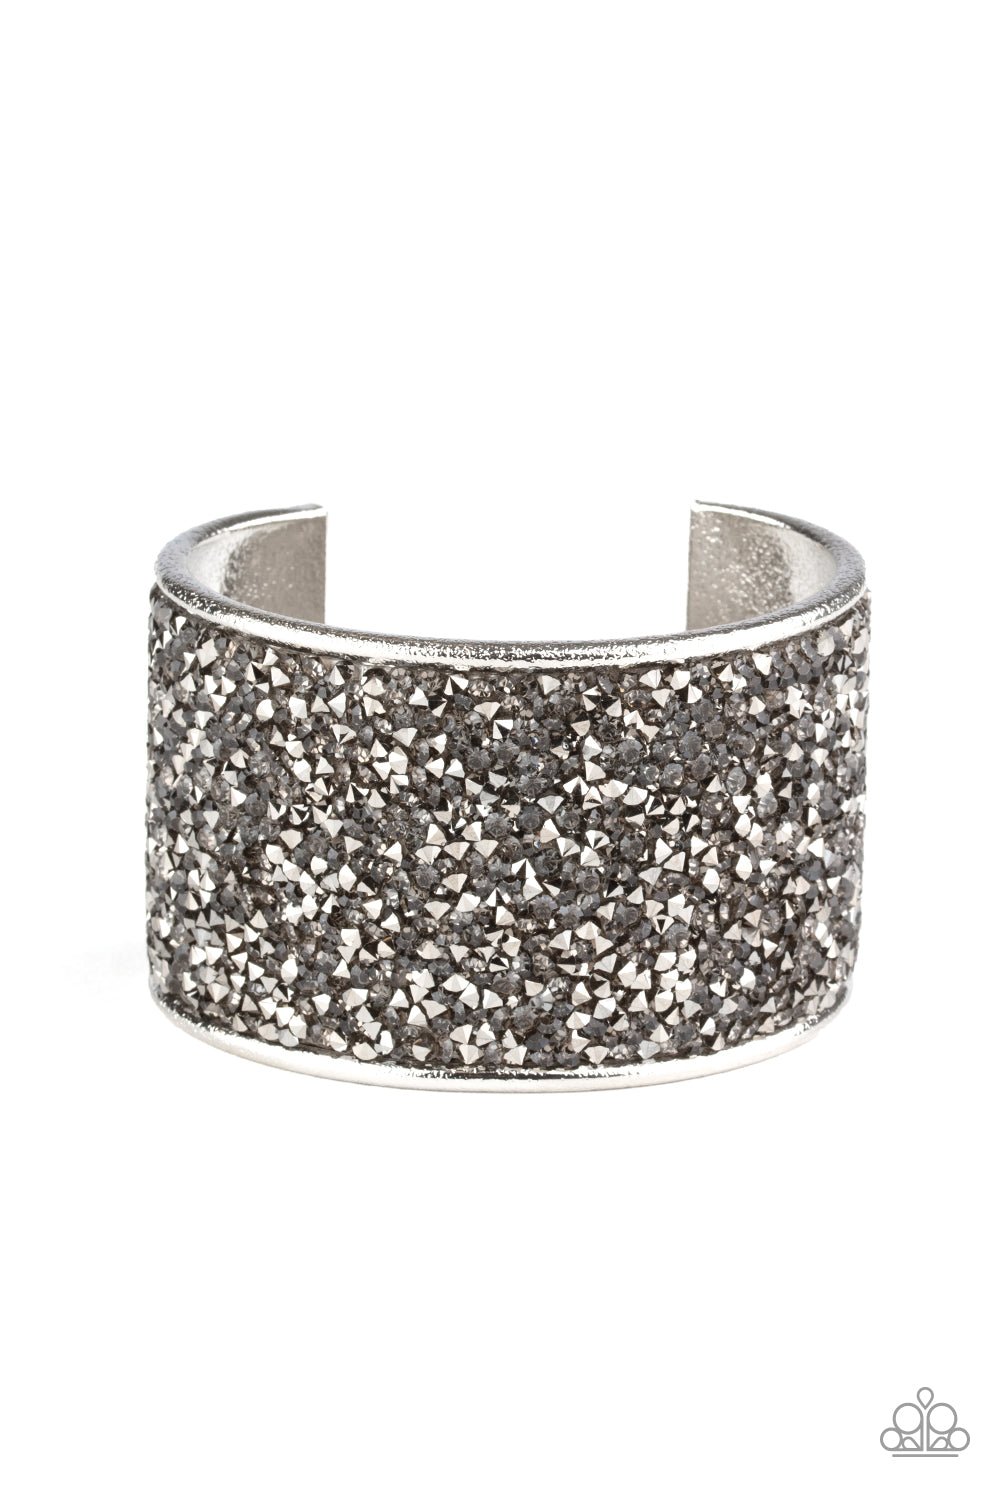 Stellar Radiance - Silver Cuff Bracelet